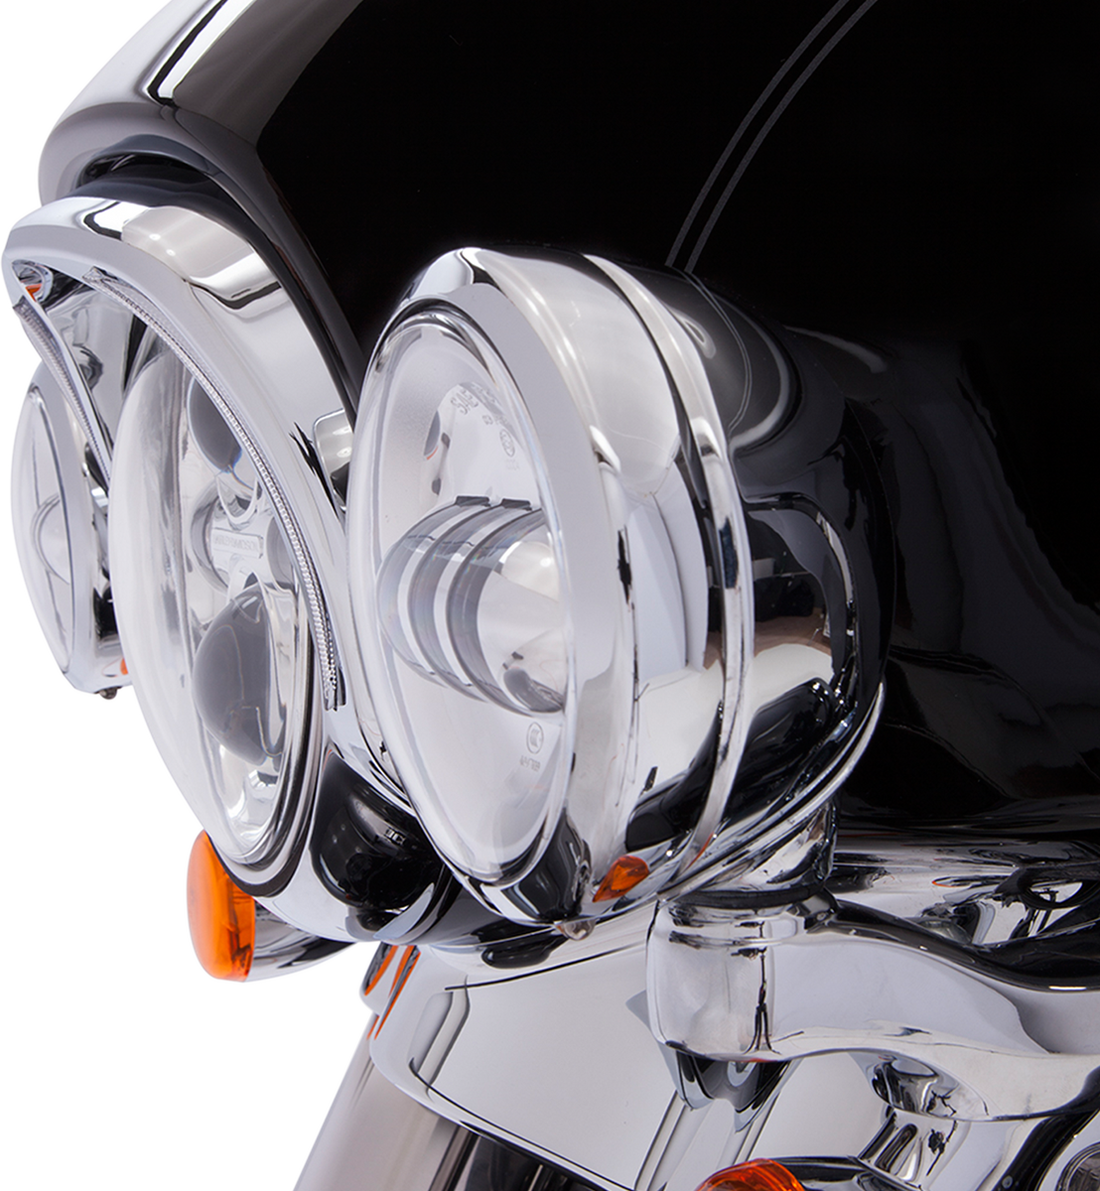 2001-1319 - CIRO Headlight Bezel - Chrome 45200